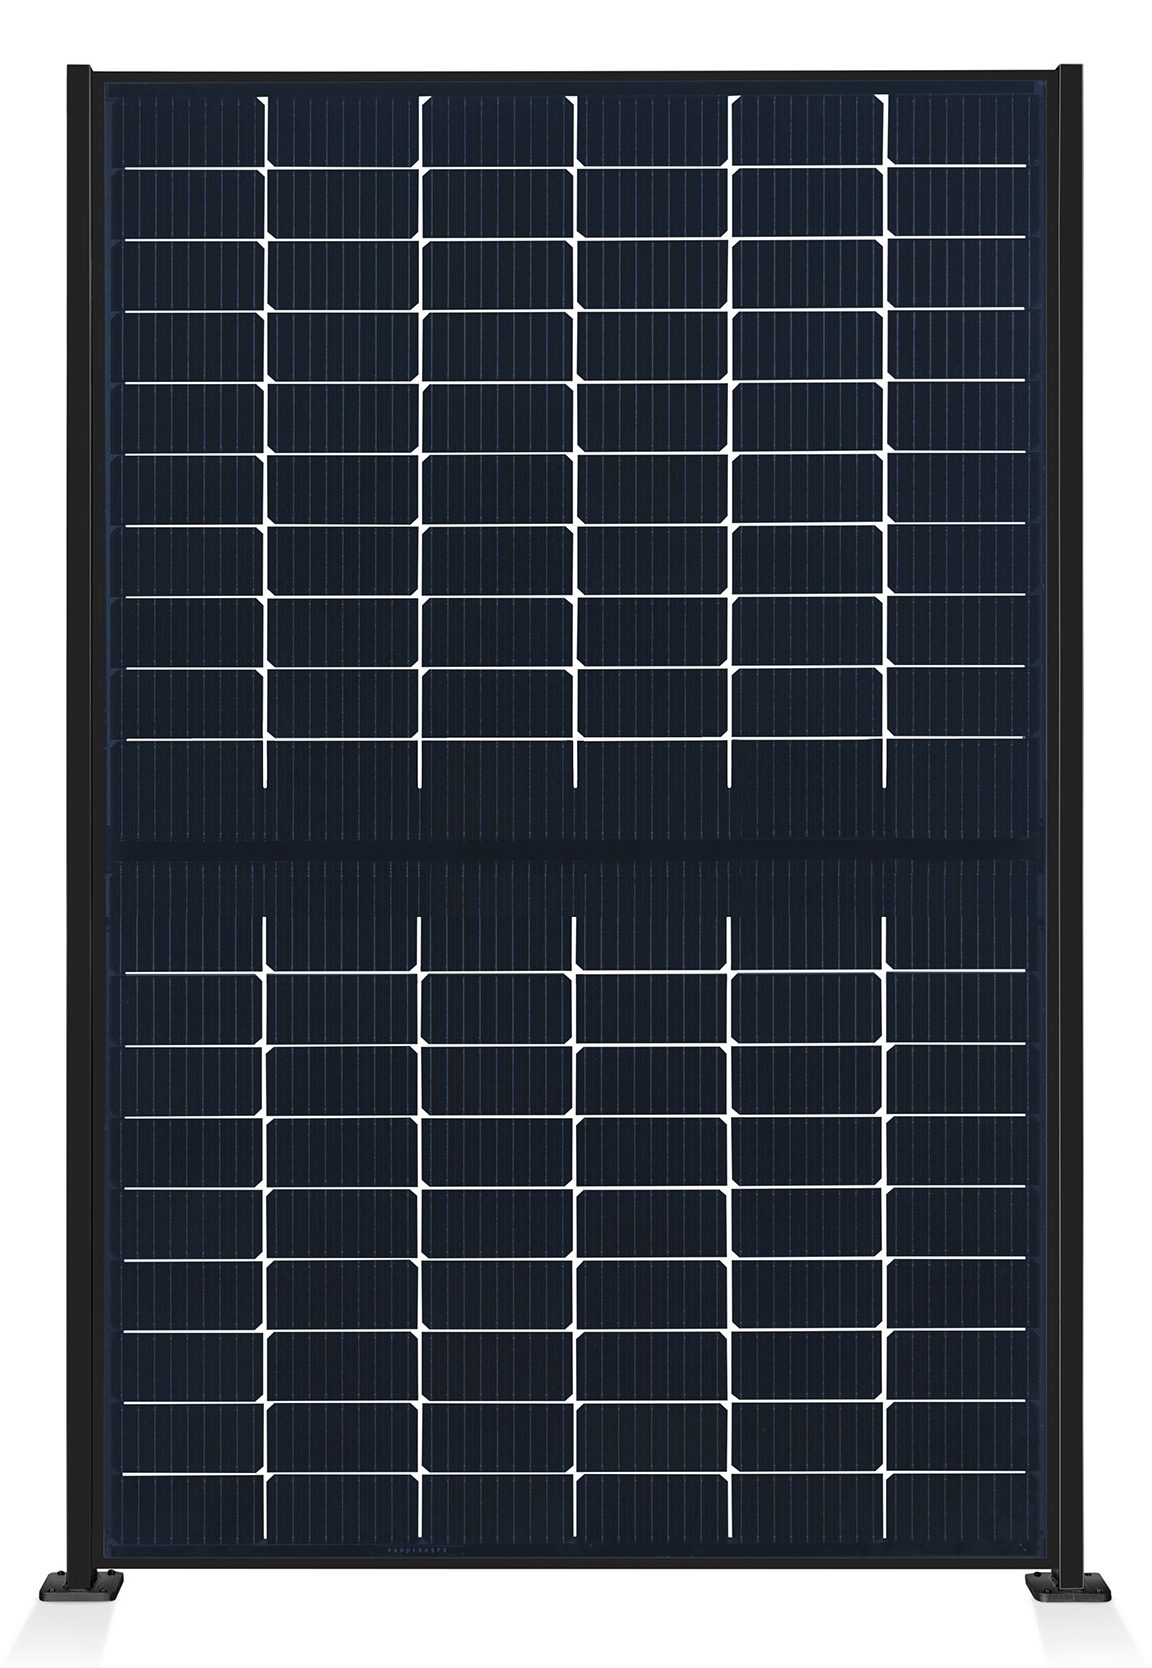 ausschnitt_0021_element-solar-sichtschutz-pv-photovoltaik-zaun-collection-hutter-panel-transparent-pfosten-schwarz-front.jpg